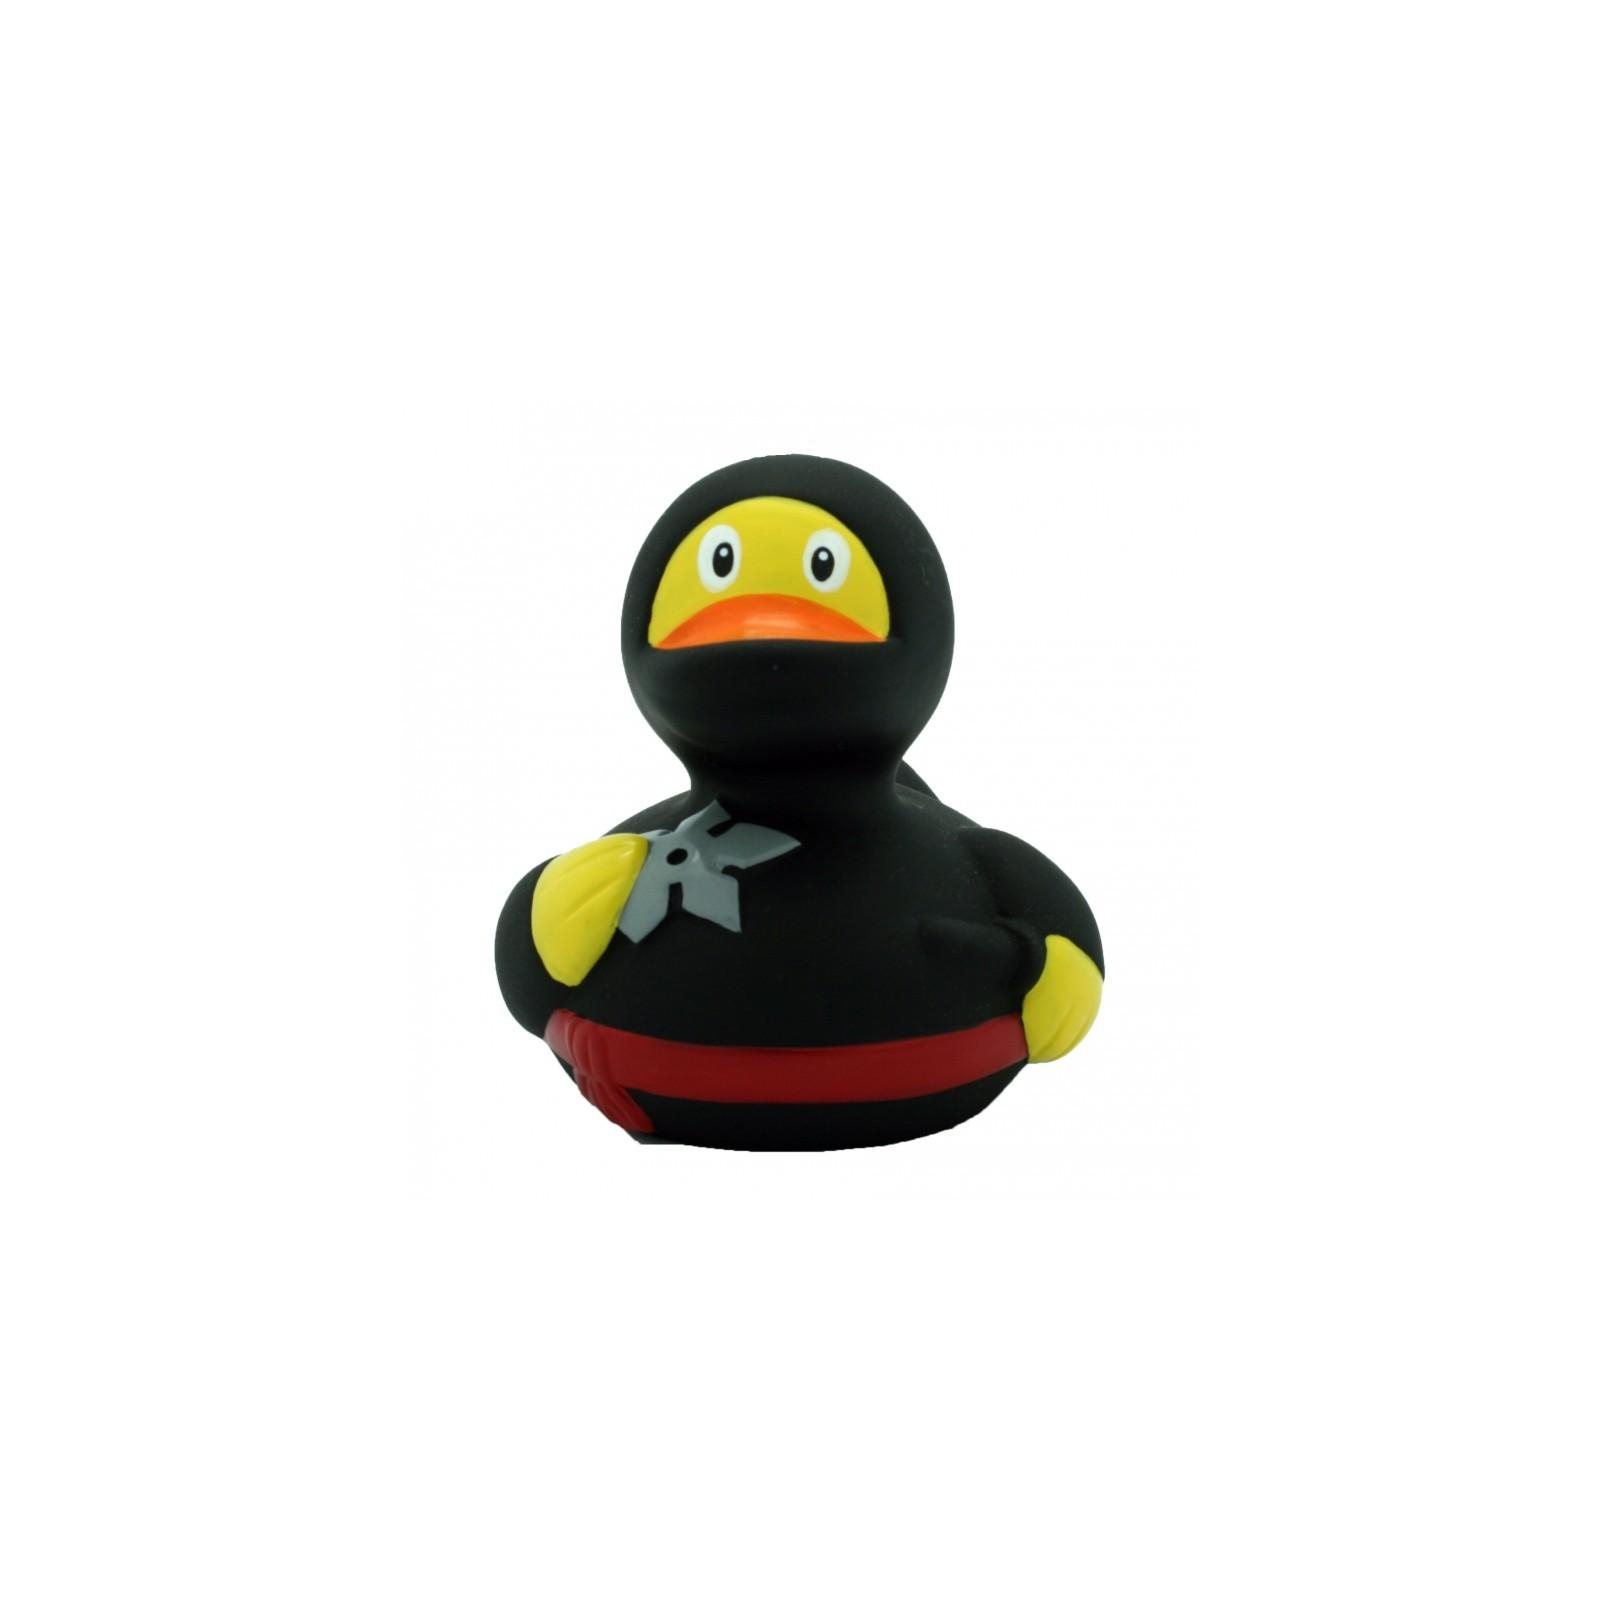 Игрушка для ванной Funny Ducks Ниндзя утка (L1819)